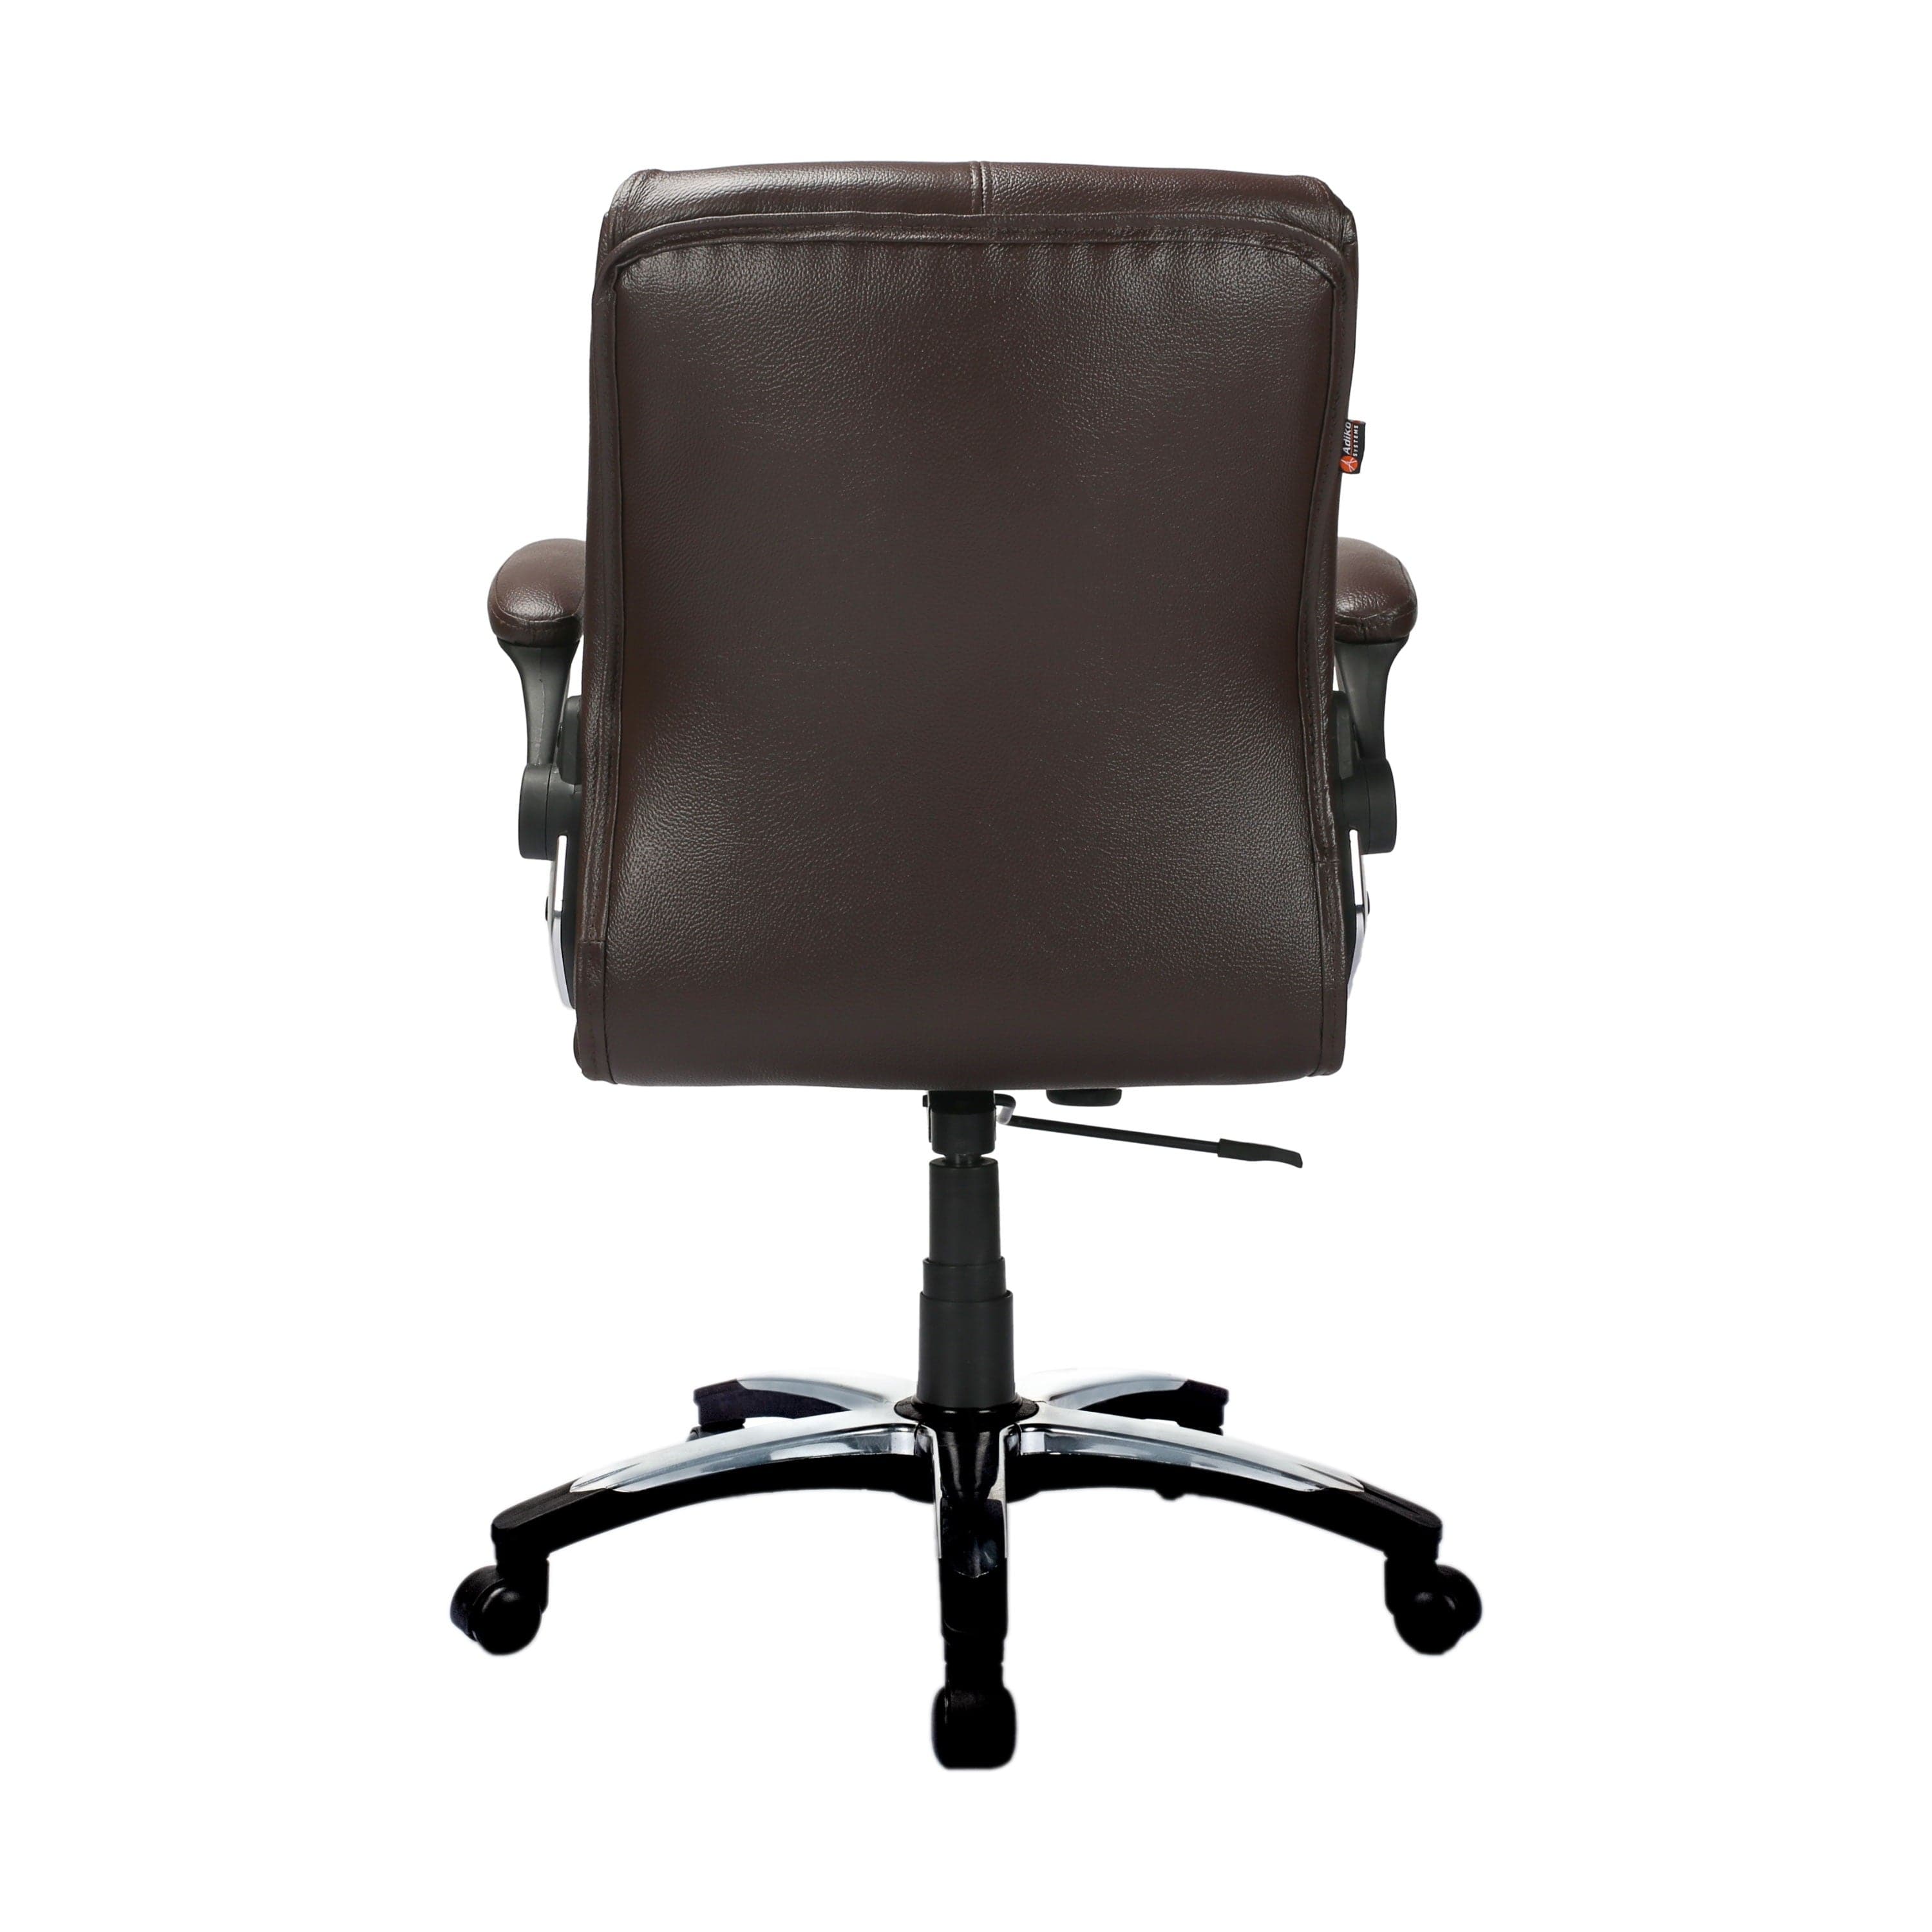 Adiko Medium Back Exceutive Chair in Brown